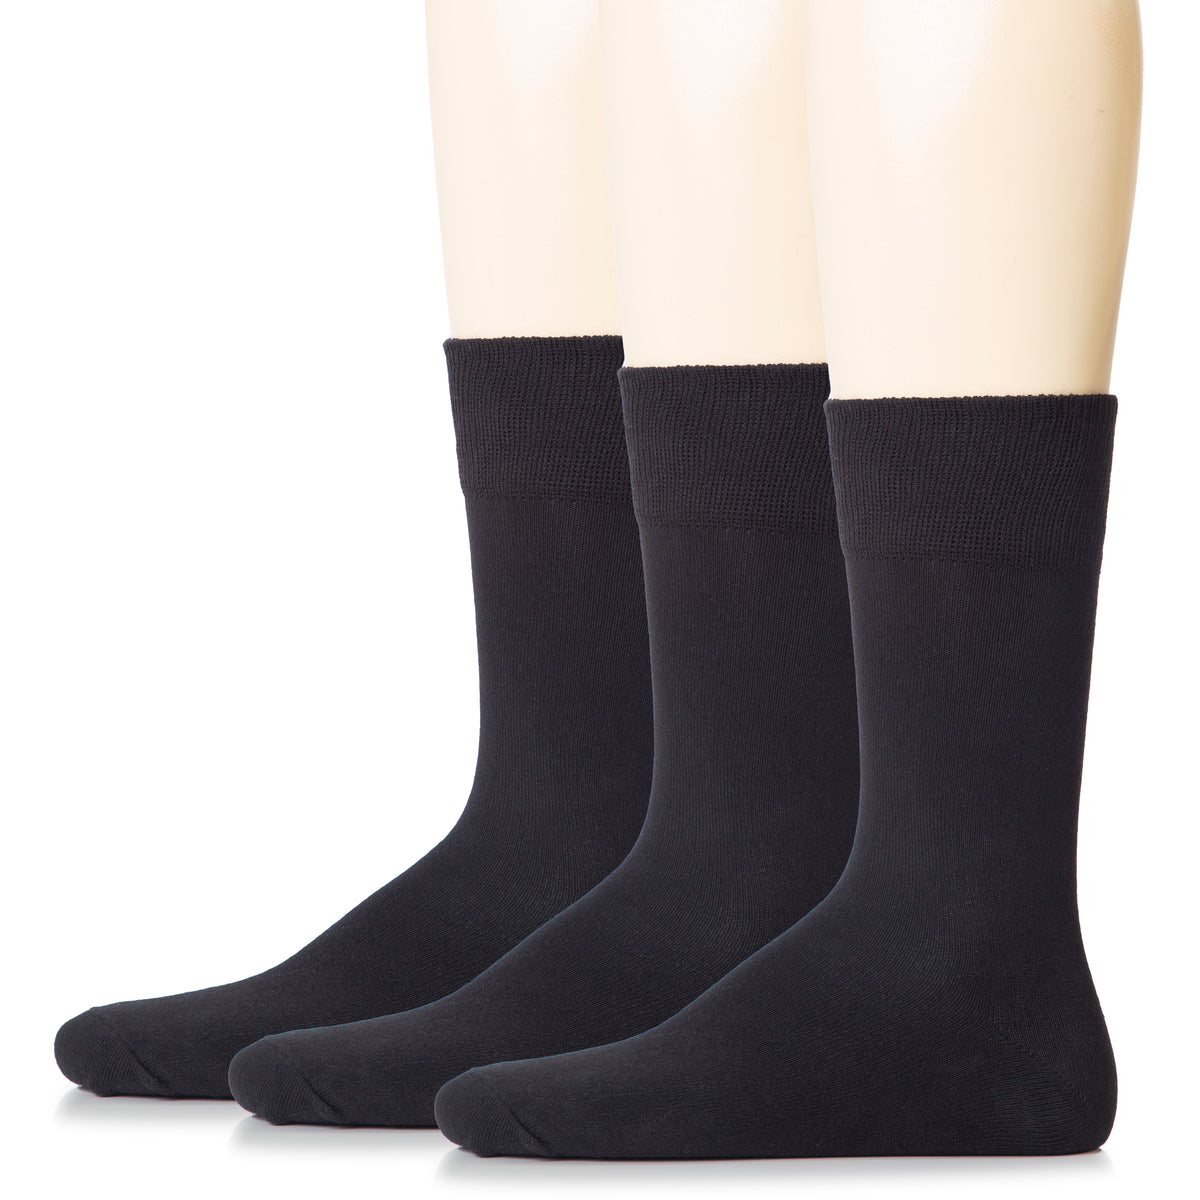 Hugh Ugoli Men Cotton Dress Socks XL / L / M / S Sizes, 3 Pairs | Shoe Size:10-13 | Burgundy